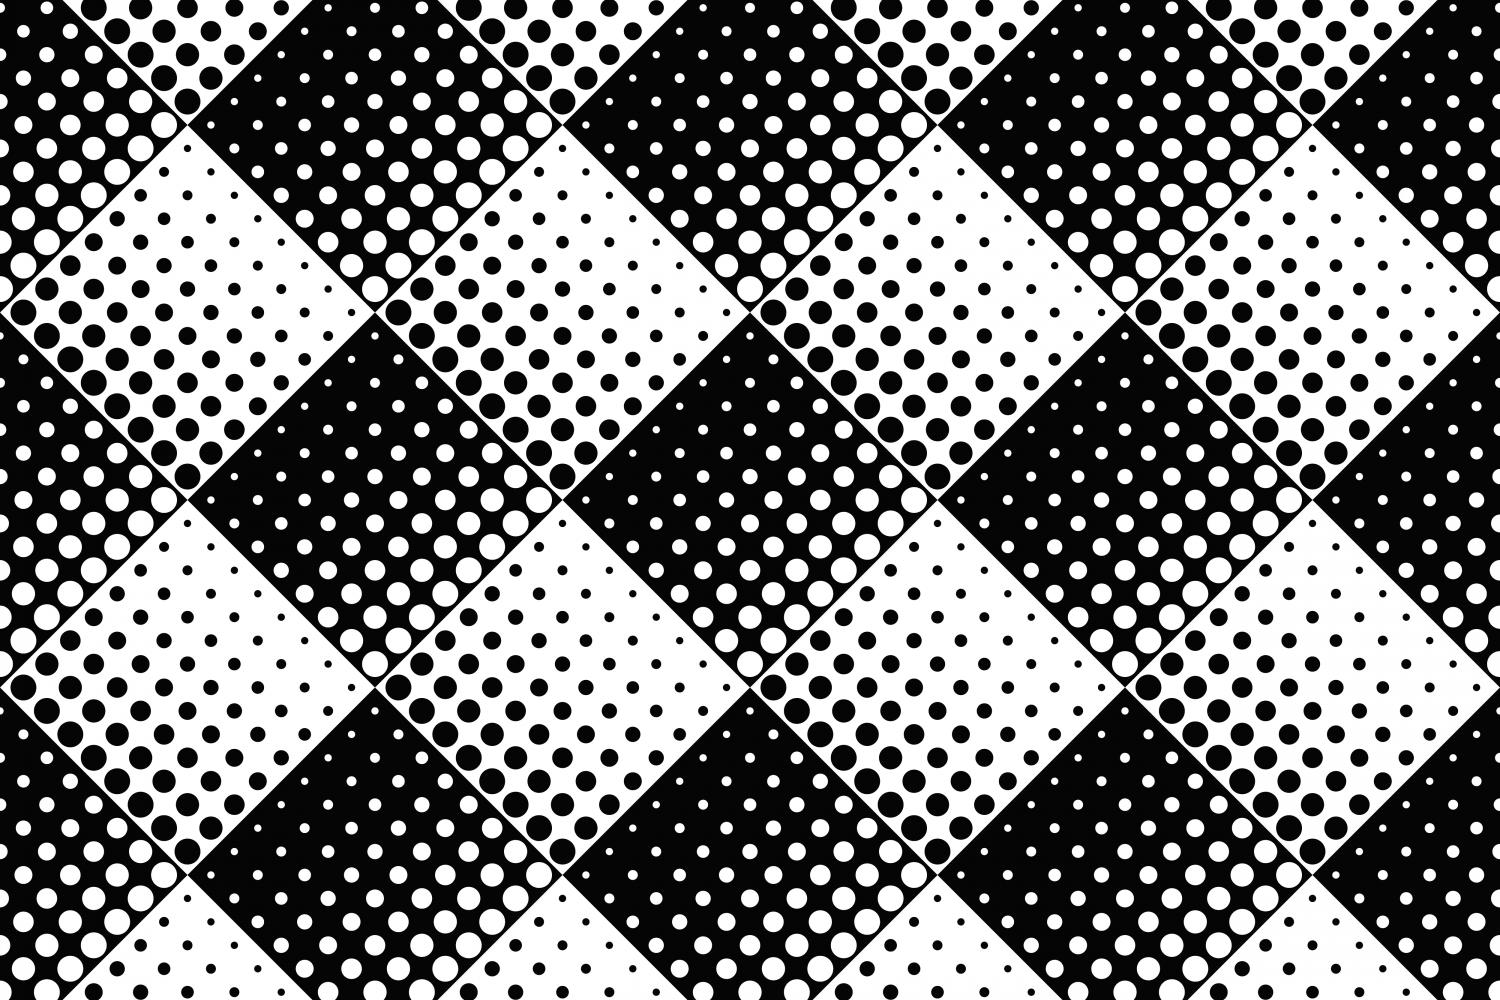 Download 24 Seamless Dot Patterns (281129) | Patterns | Design Bundles